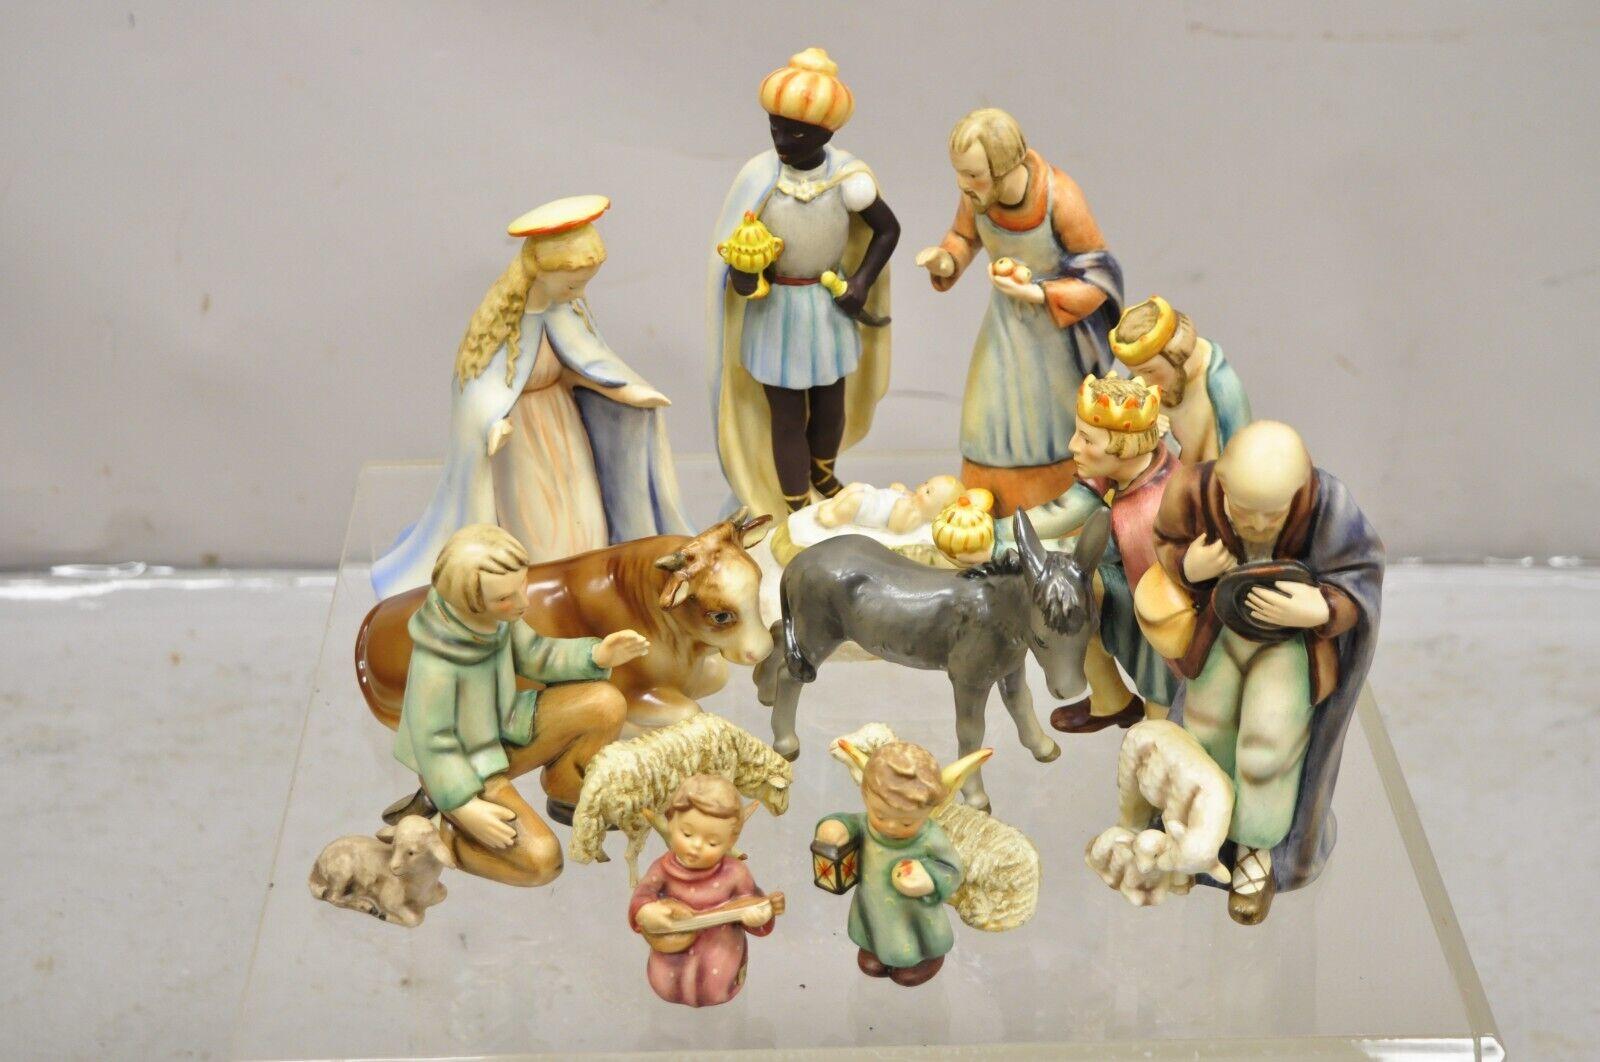 1951 Vintage Hummel Goebel Nativity Scene 15 Pc Figurine Christmas Set with Lighted Manger Set 214. Circa  1951.
Measurements: 
Various measurements ranging from:
Smallest piece (Animal): 1.5